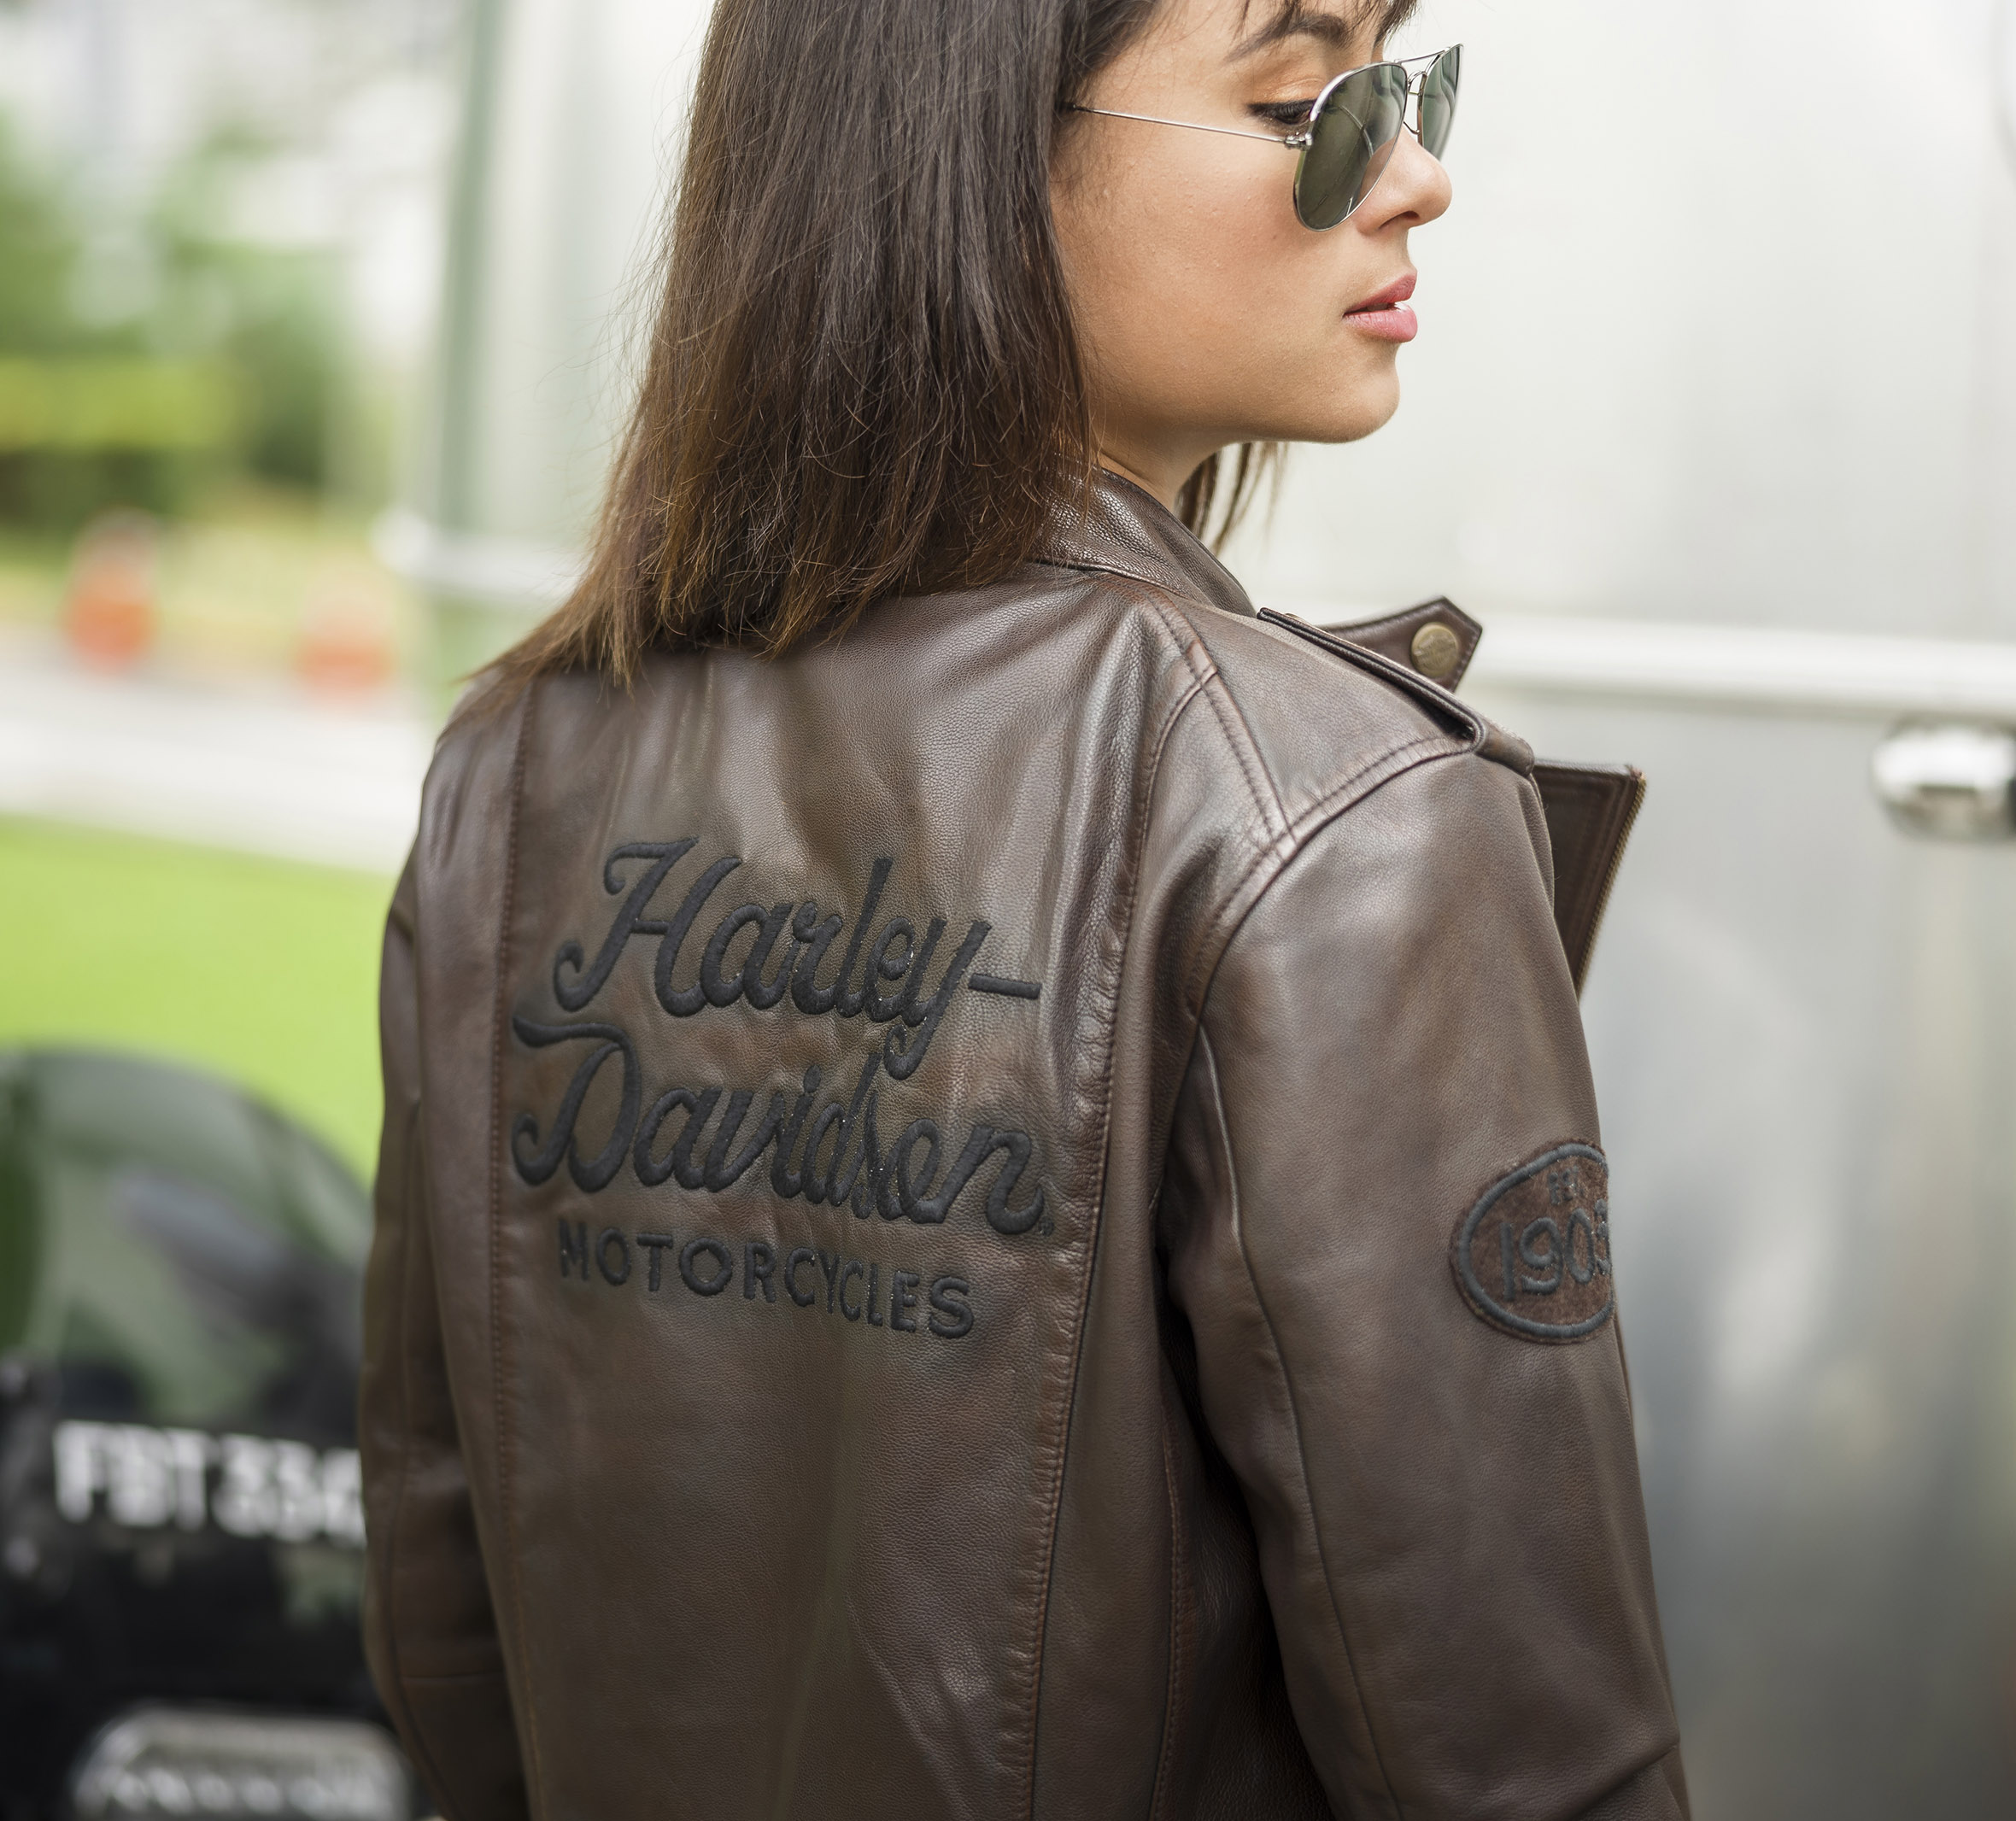 Harley Davidson womens leather jacket www.villeprudente.fr